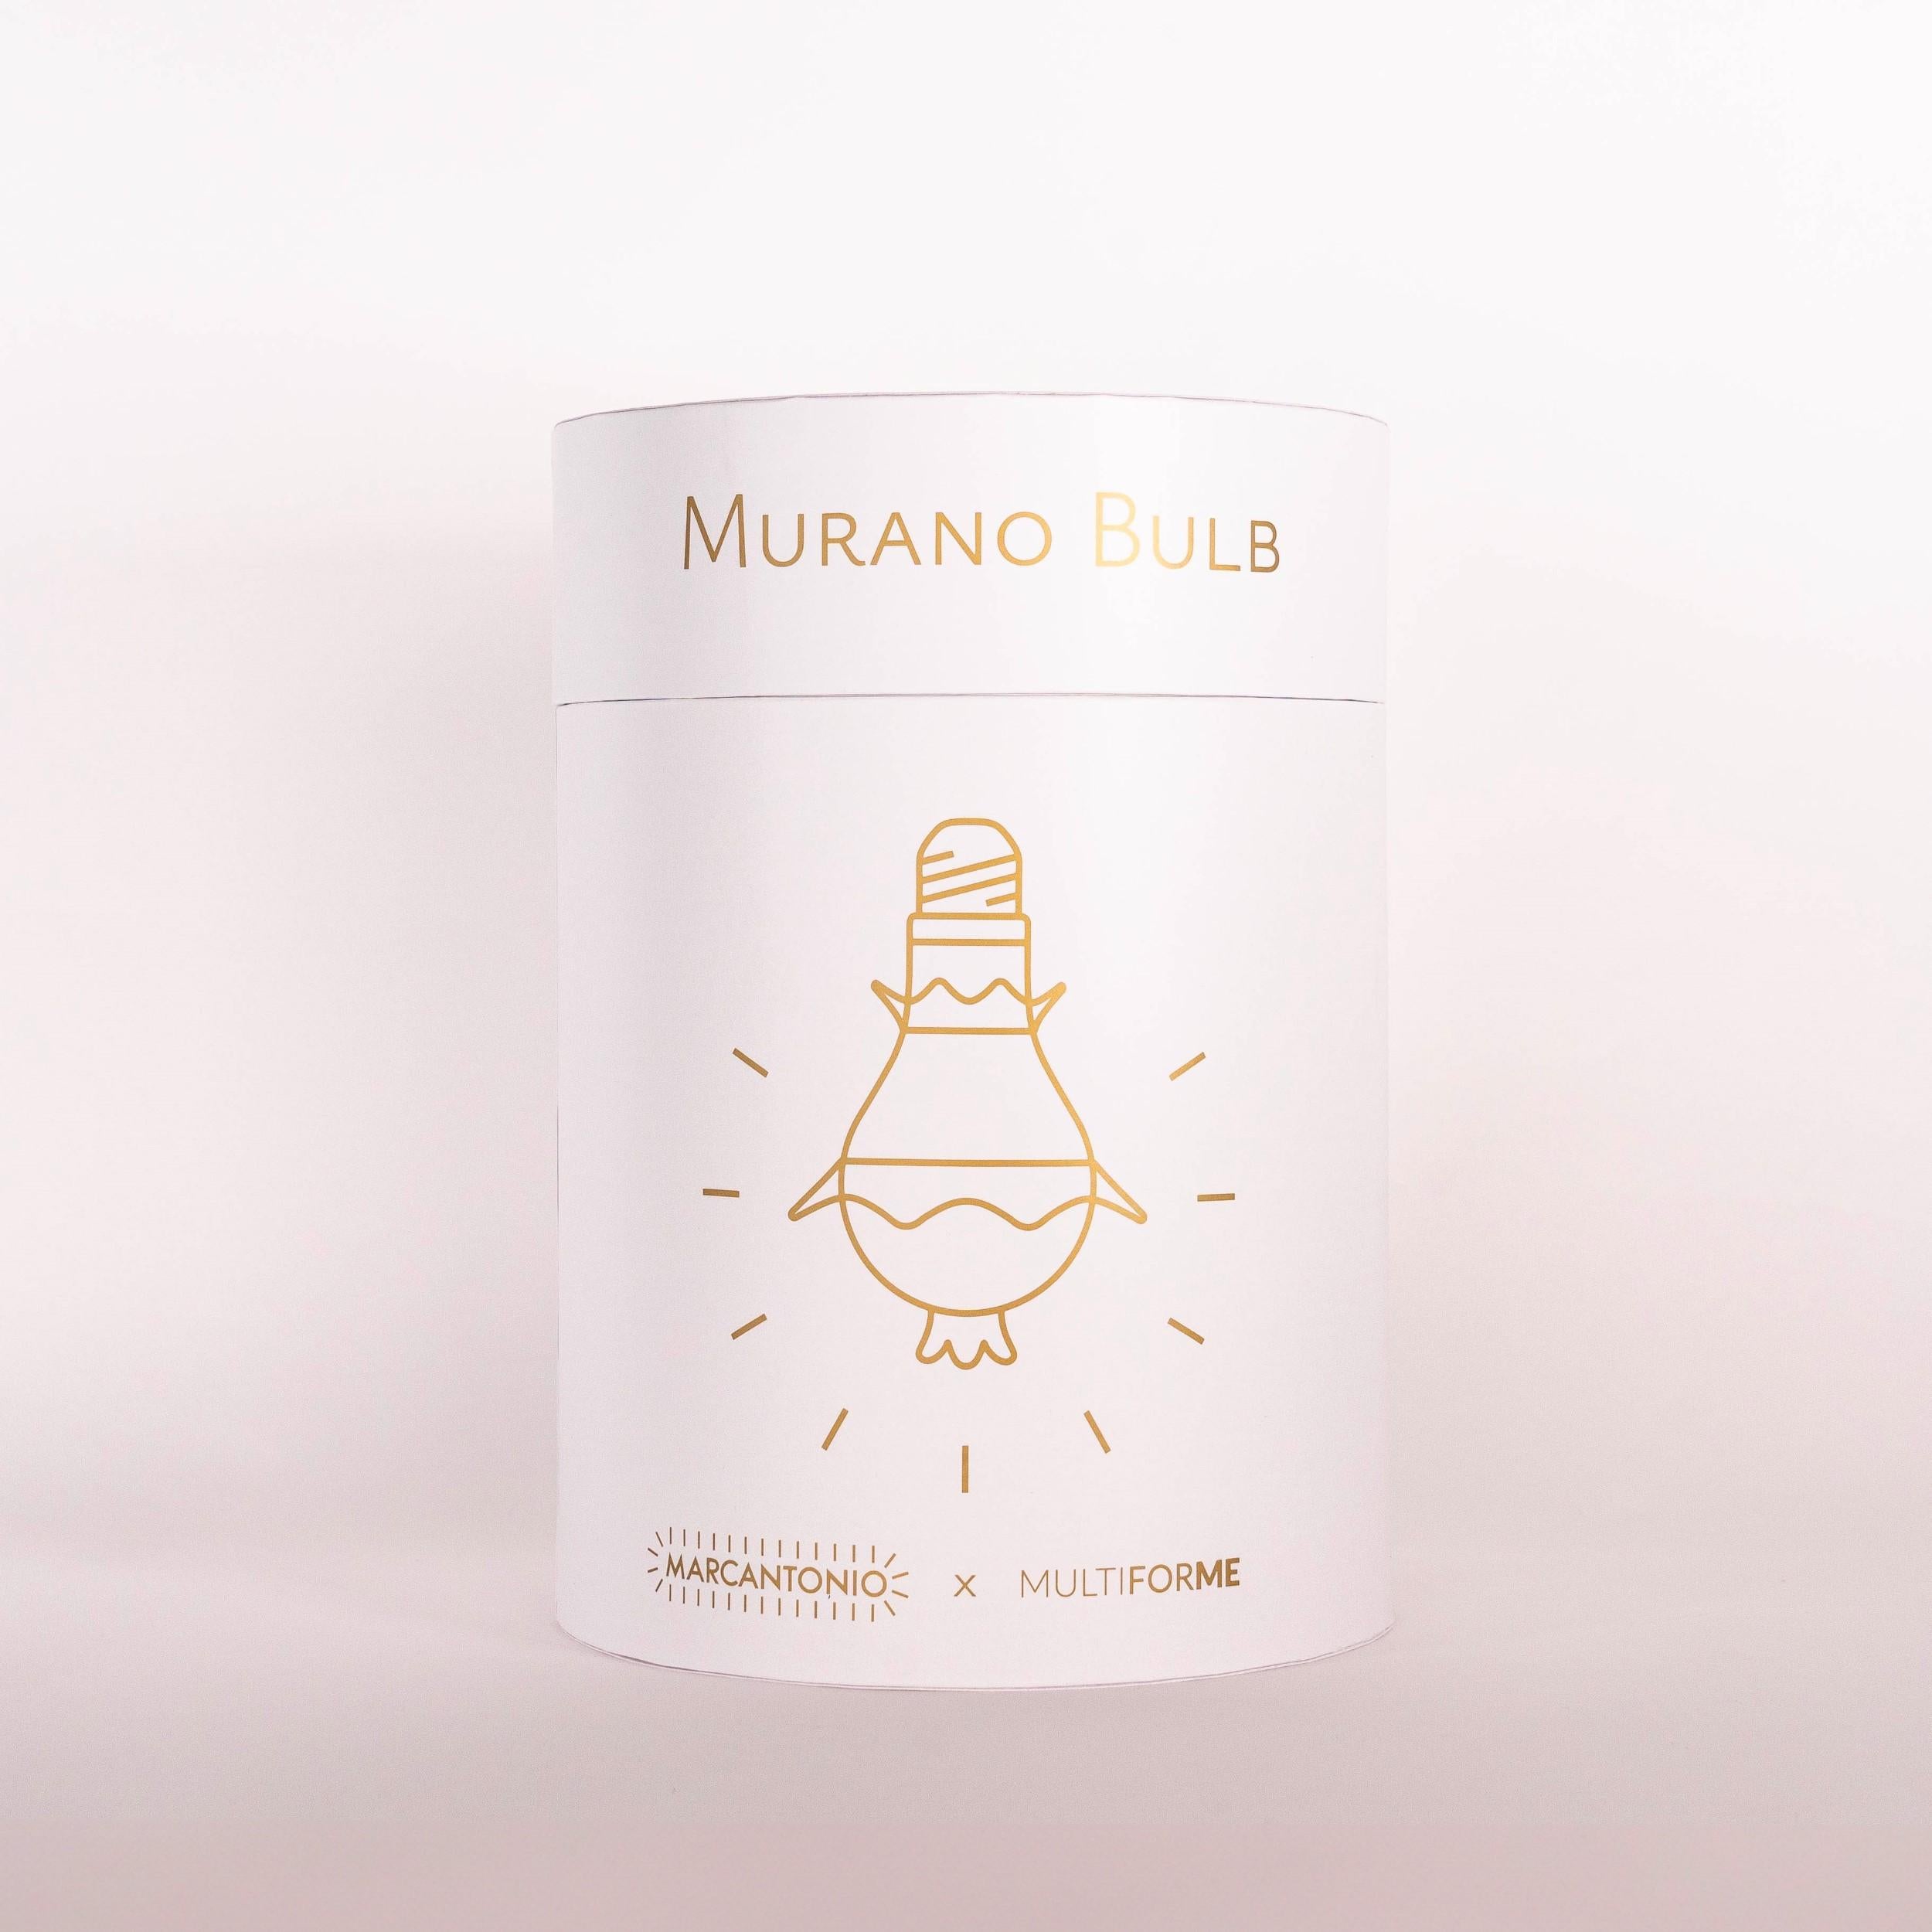 Artistic glass lightbulb chandelier Murano Bulb Marcantonio X Multiforme #02 For Sale 2